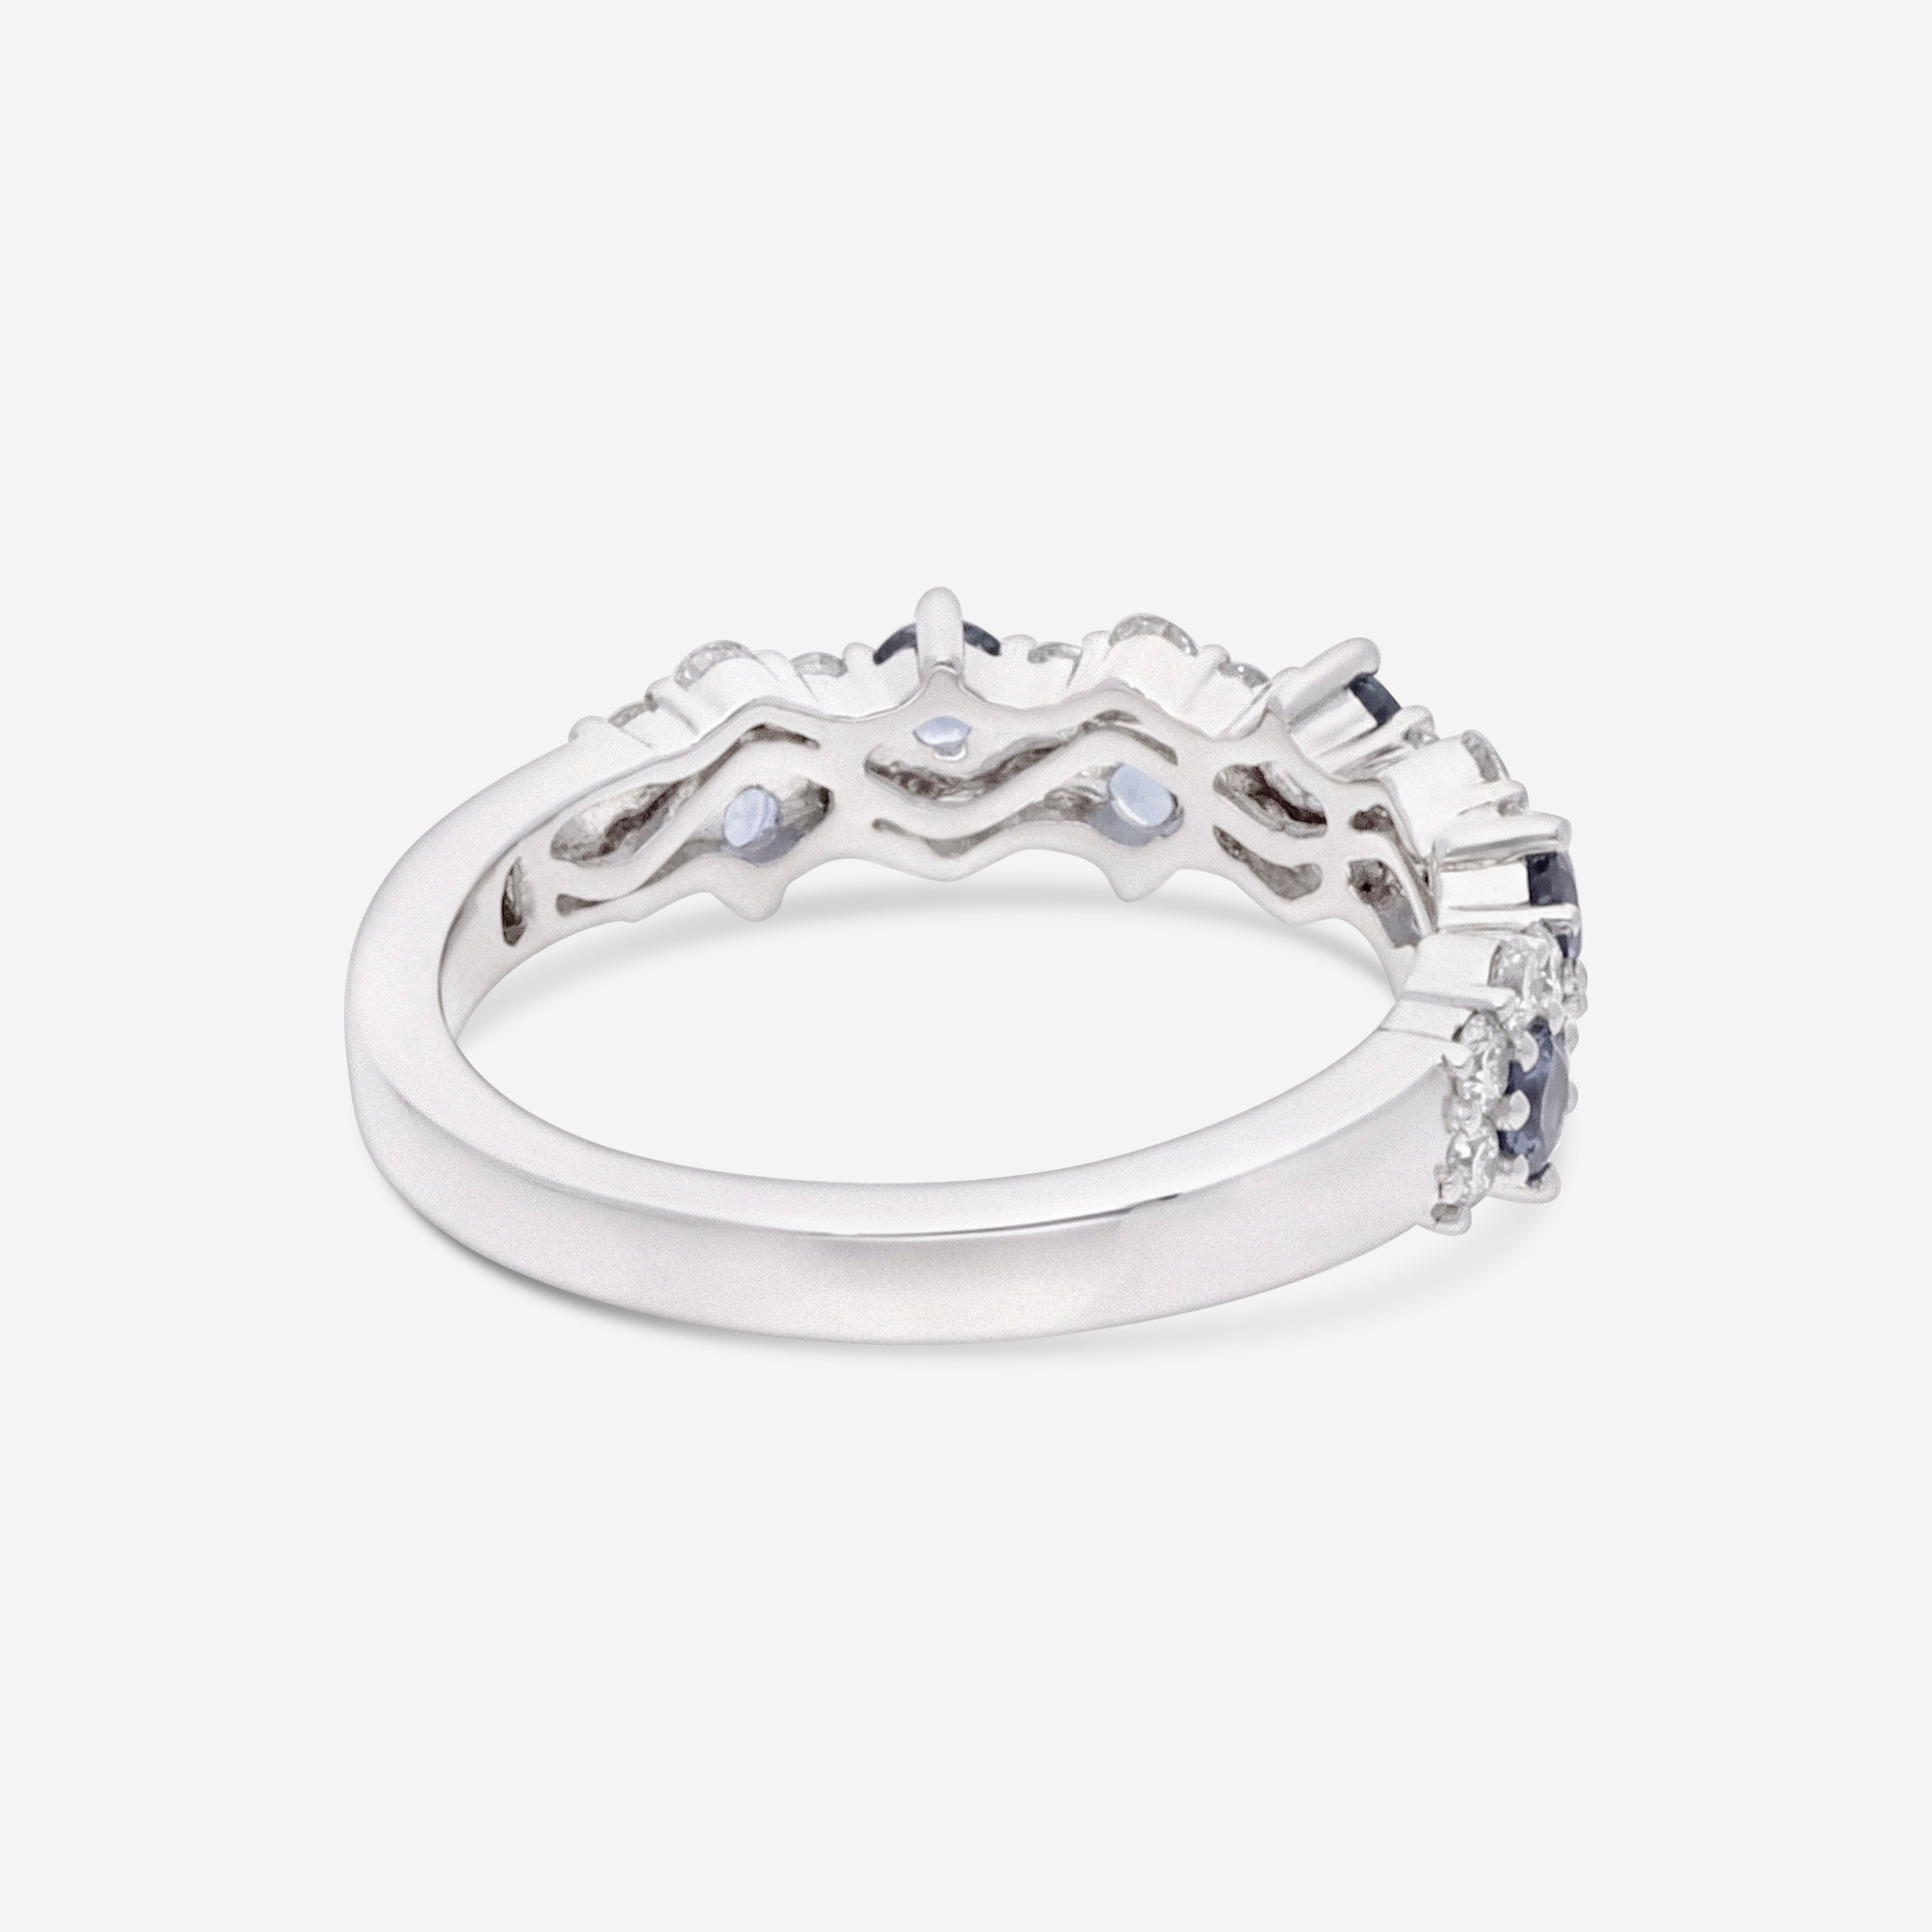 Ina Mar 14K White Gold Staggered Sapphire & Diamond Ring RG-085937-Sapp